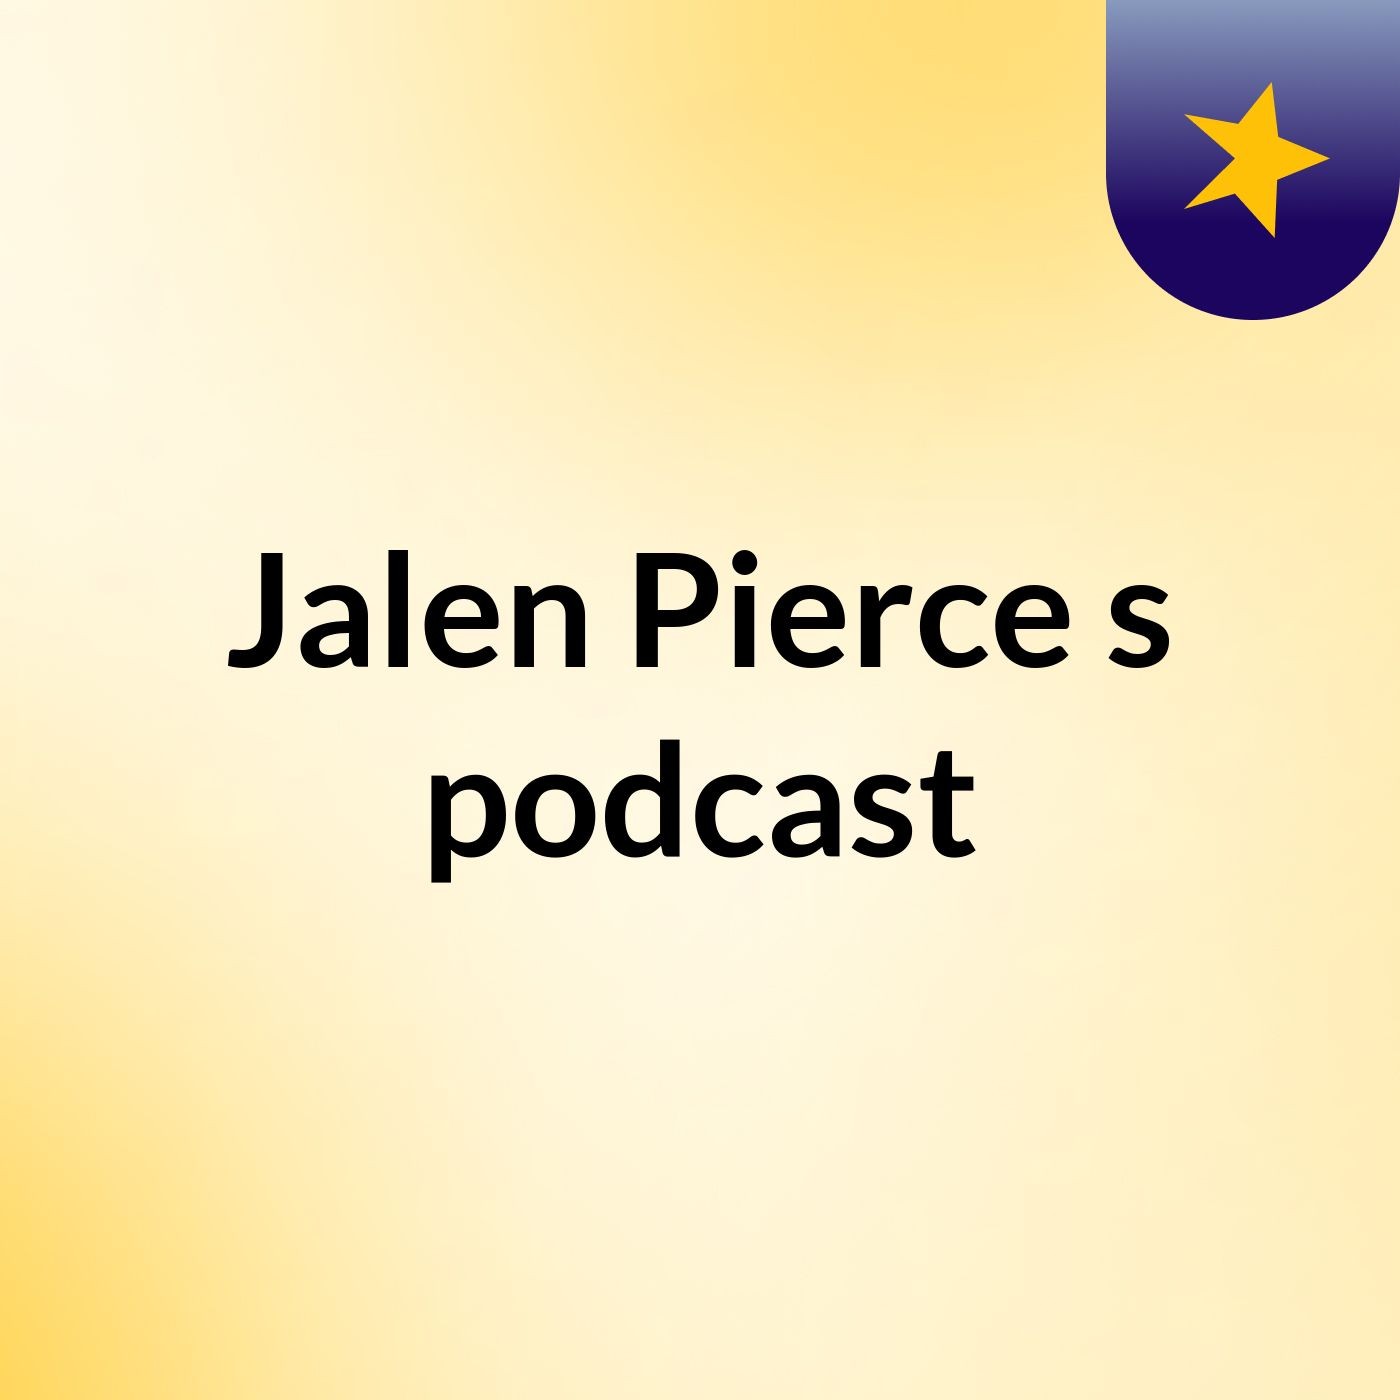 Episode 3 - Jalen Pierce's podcast